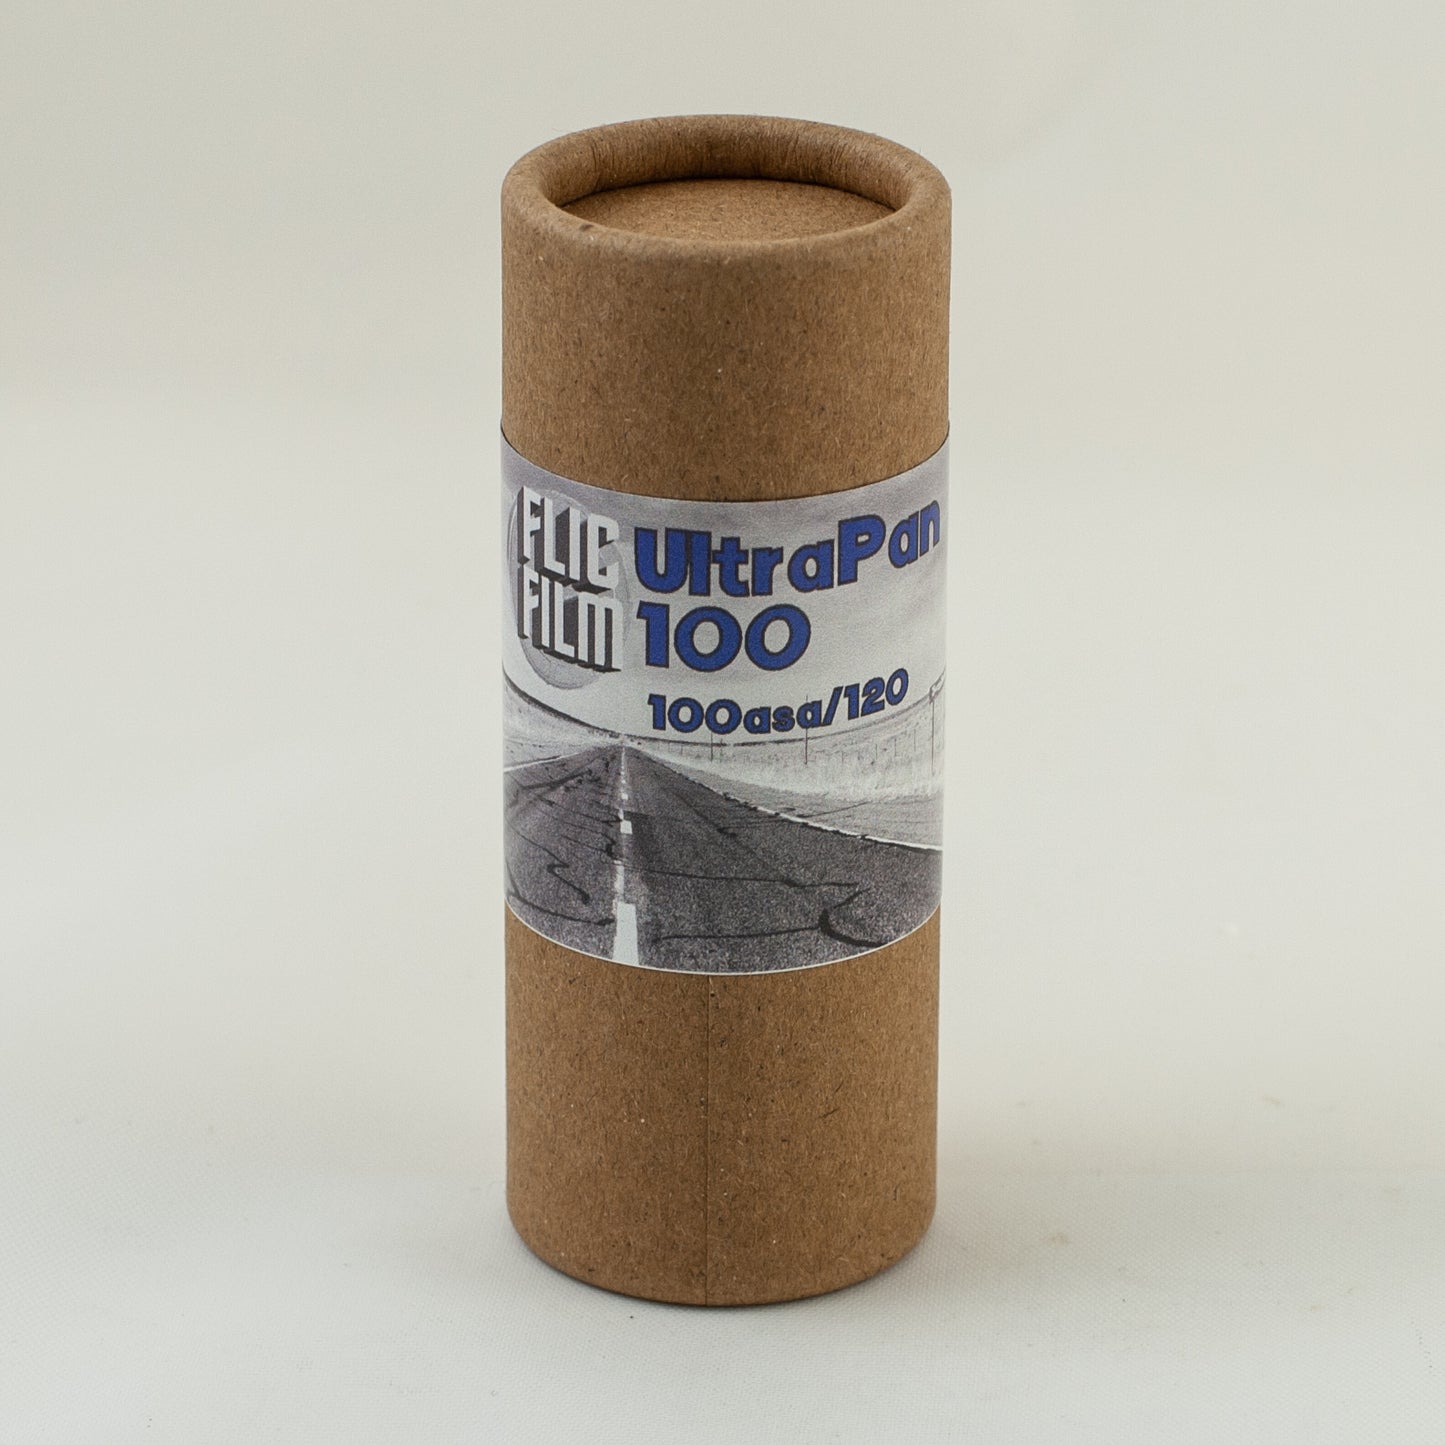 Flic Film - ULTRAPAN iso100 - 120